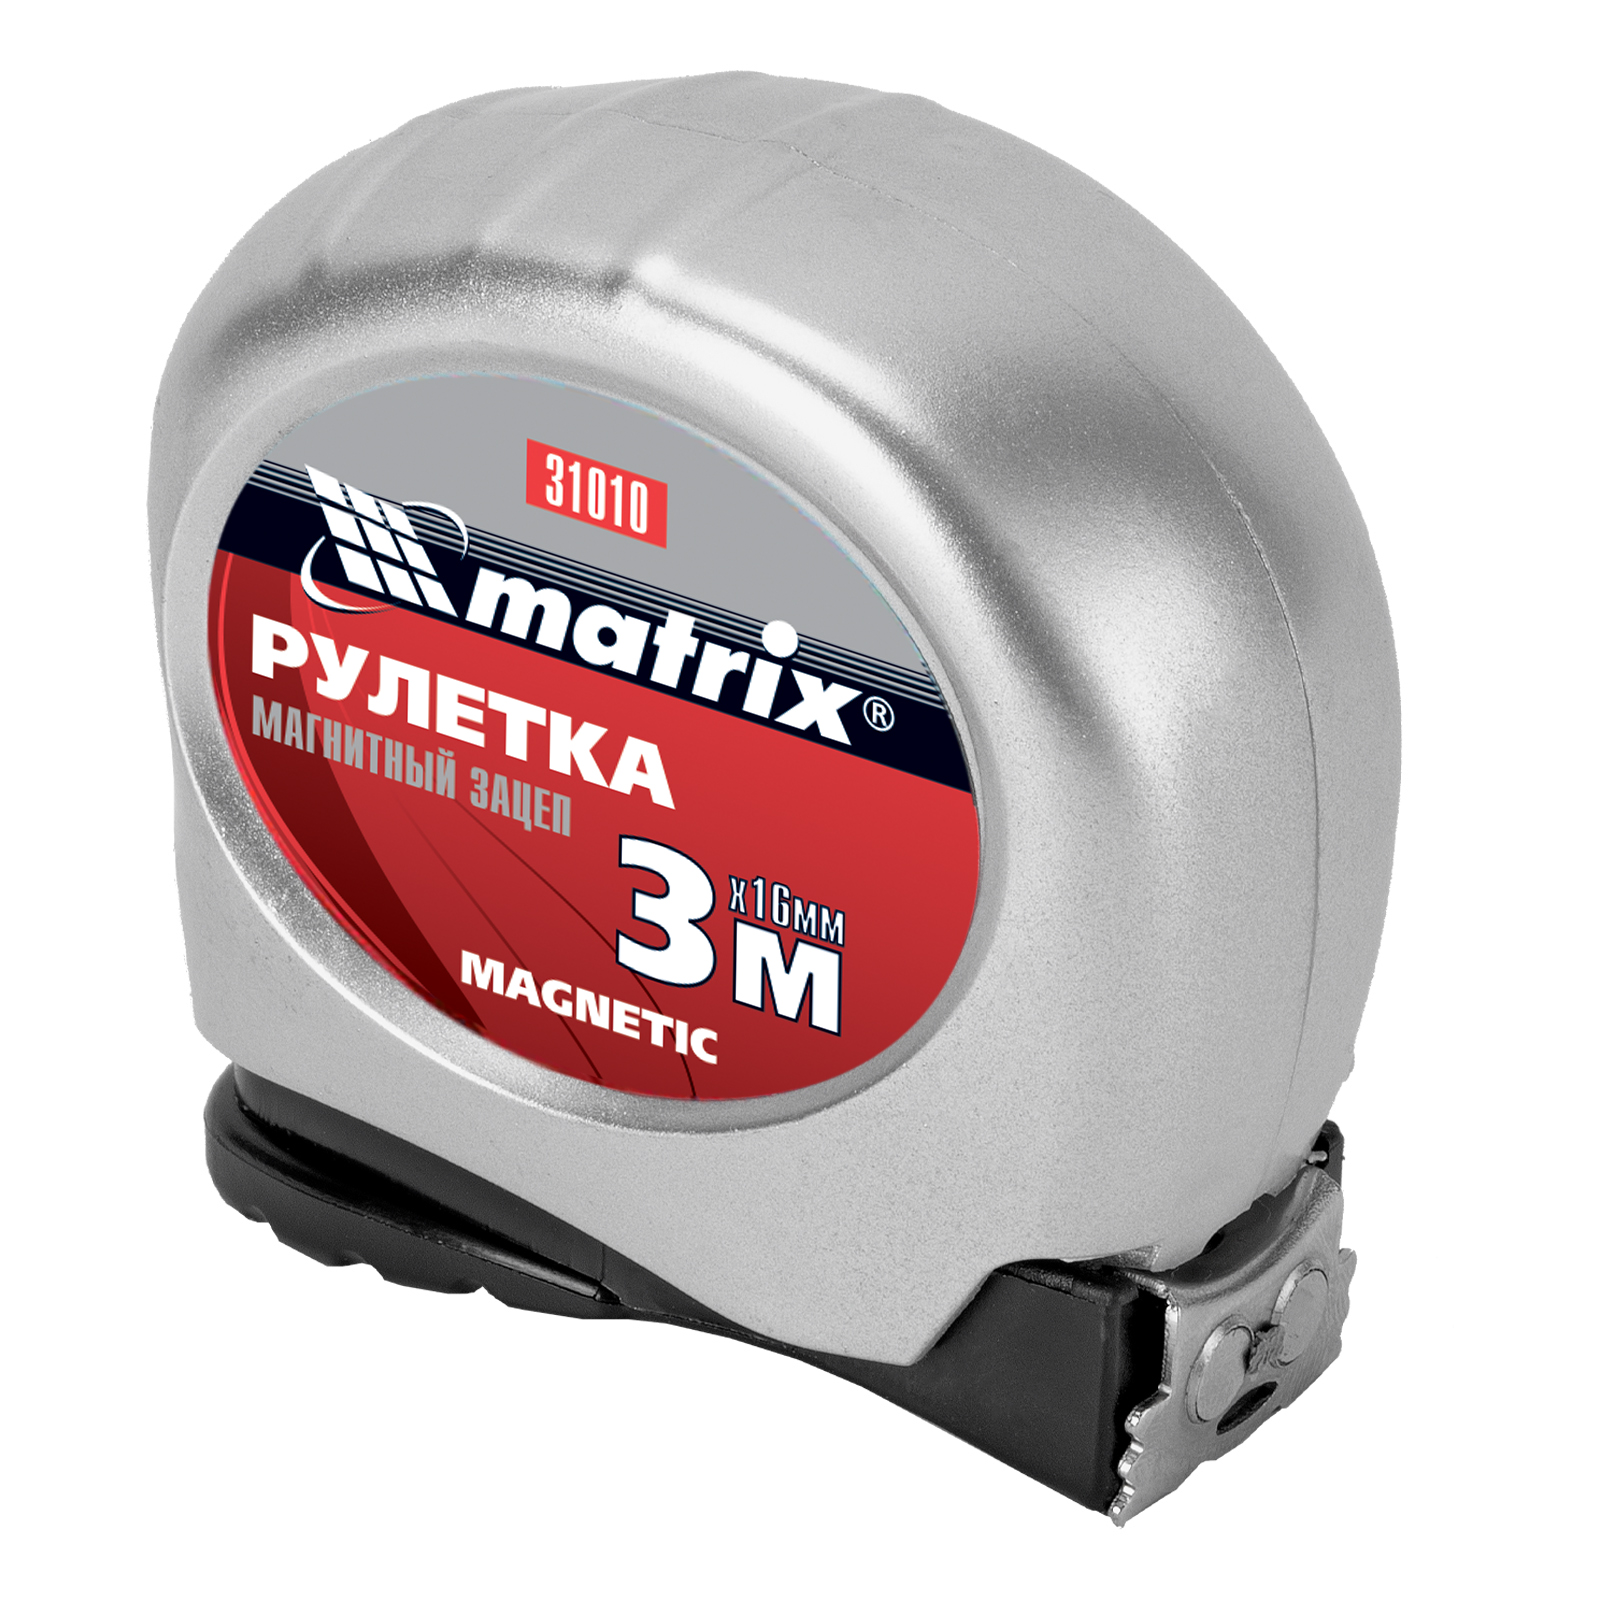 Рулетка MATRIX Magnetic 3мх16мм 31010